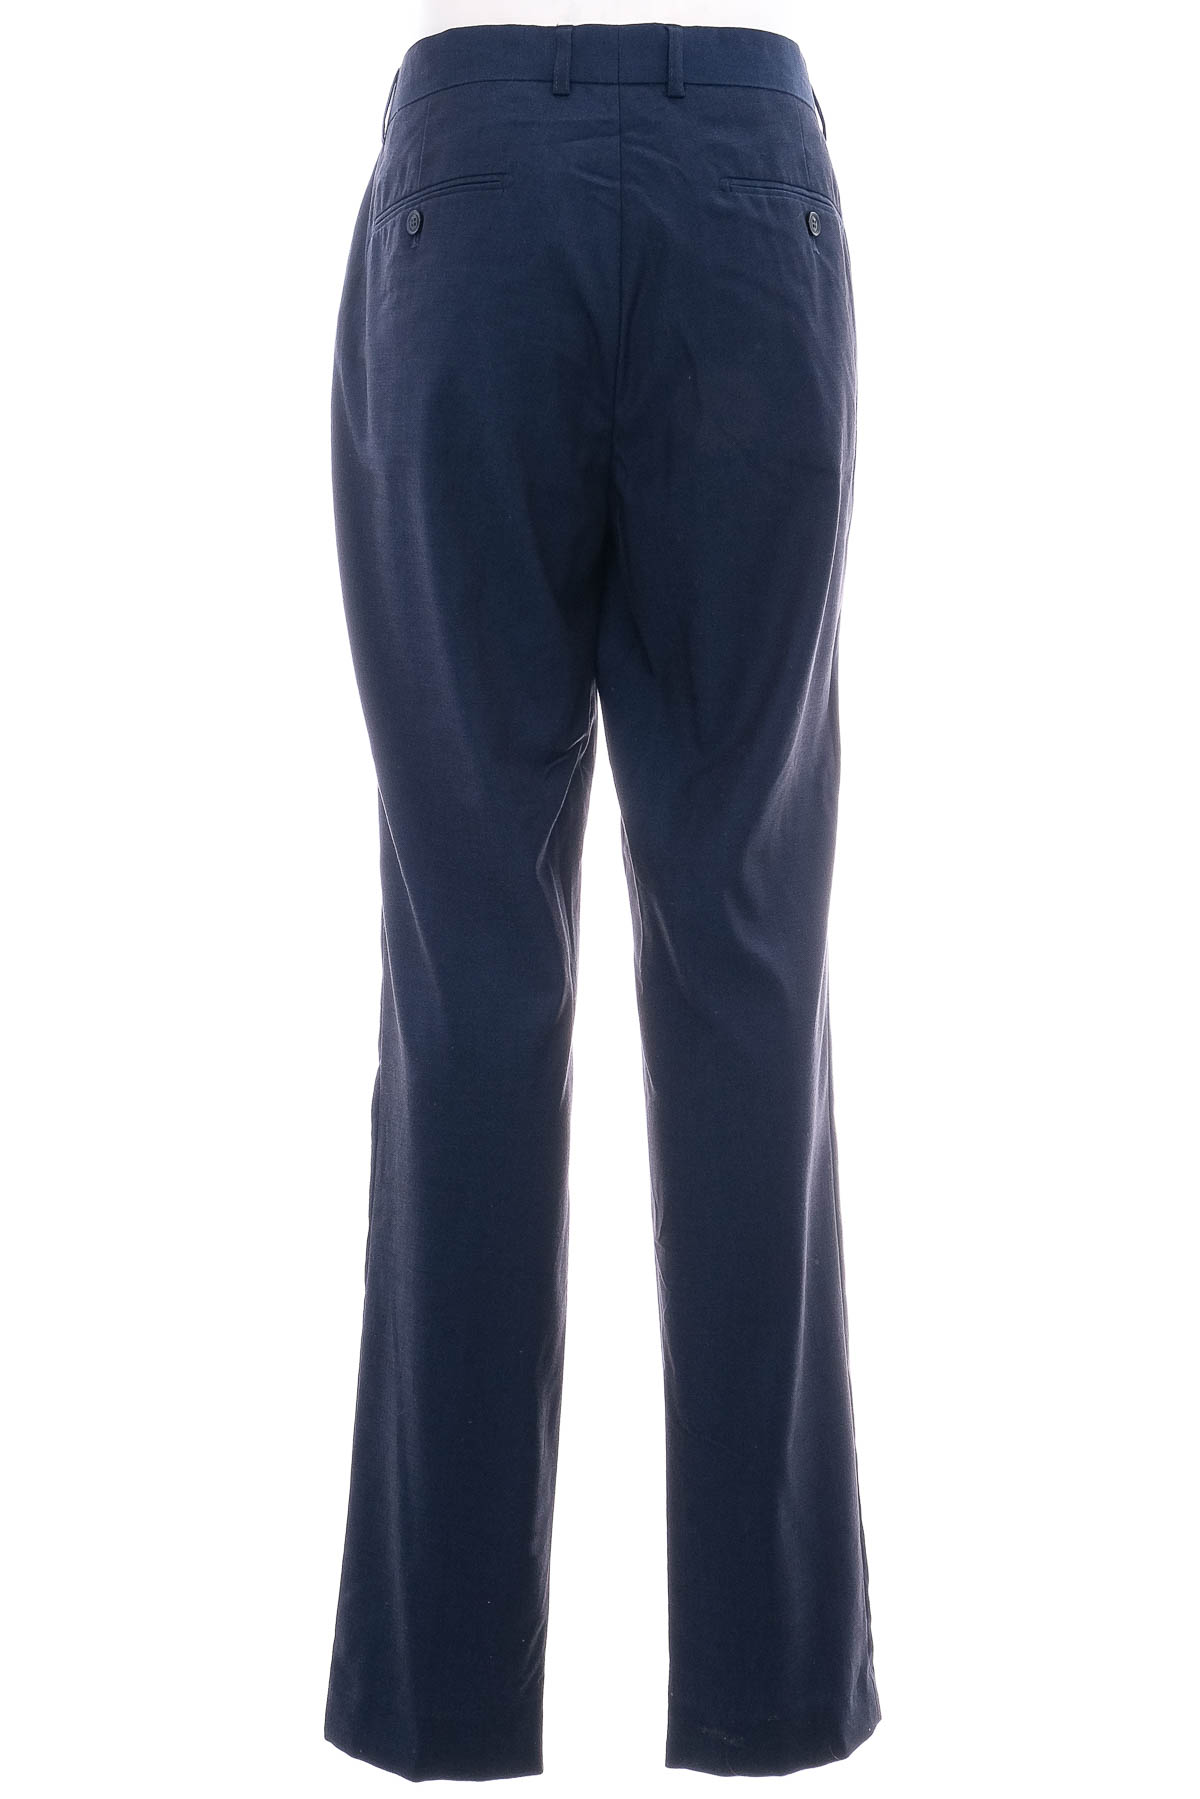 Men's trousers - CONNOR - 1